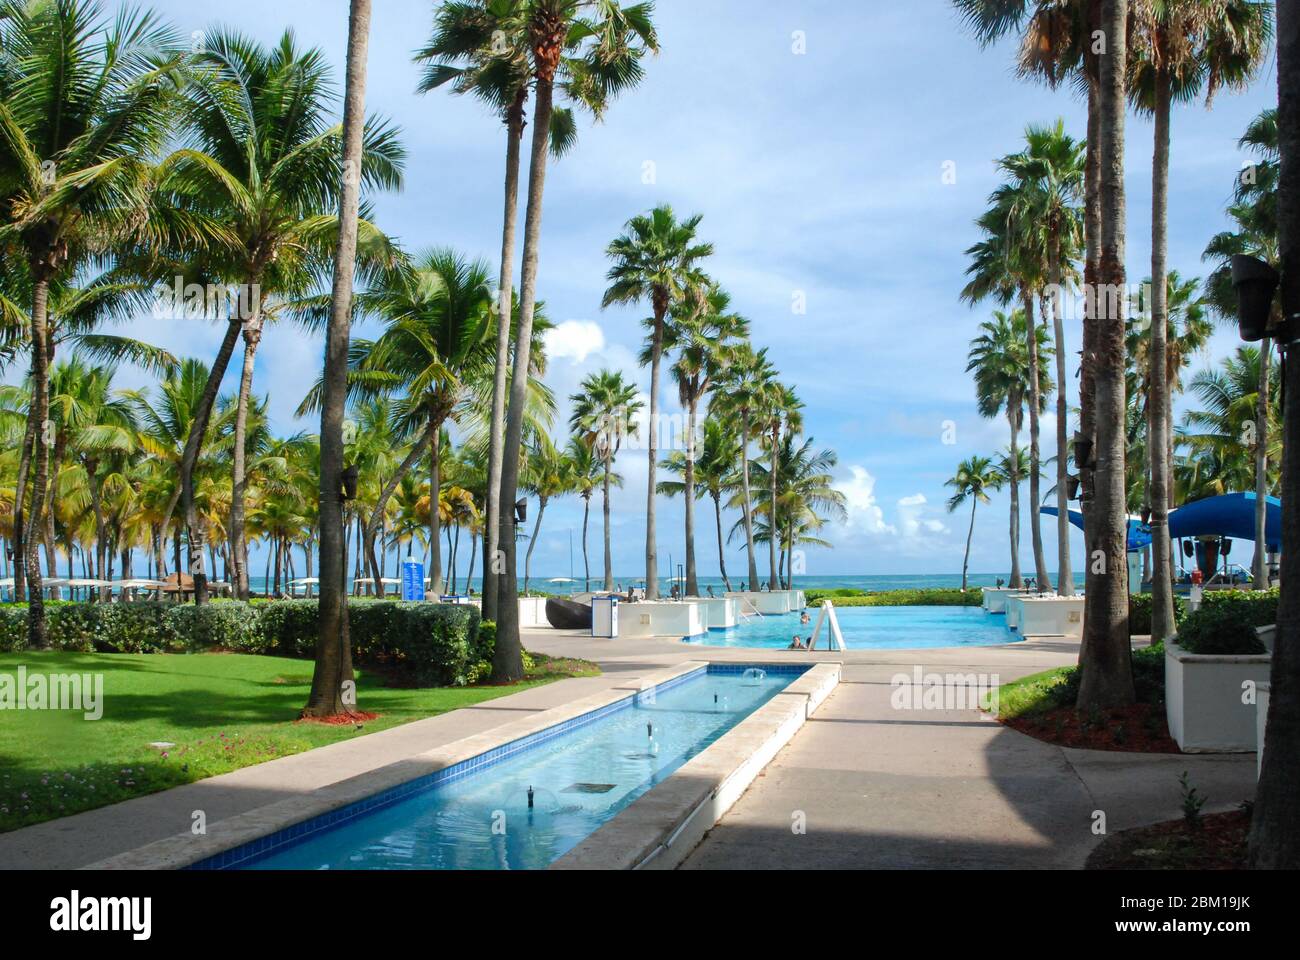 Caribe Hilton Hotel and resort near San Juan on the Caribbean Island of Puerto Rico Stock Photo